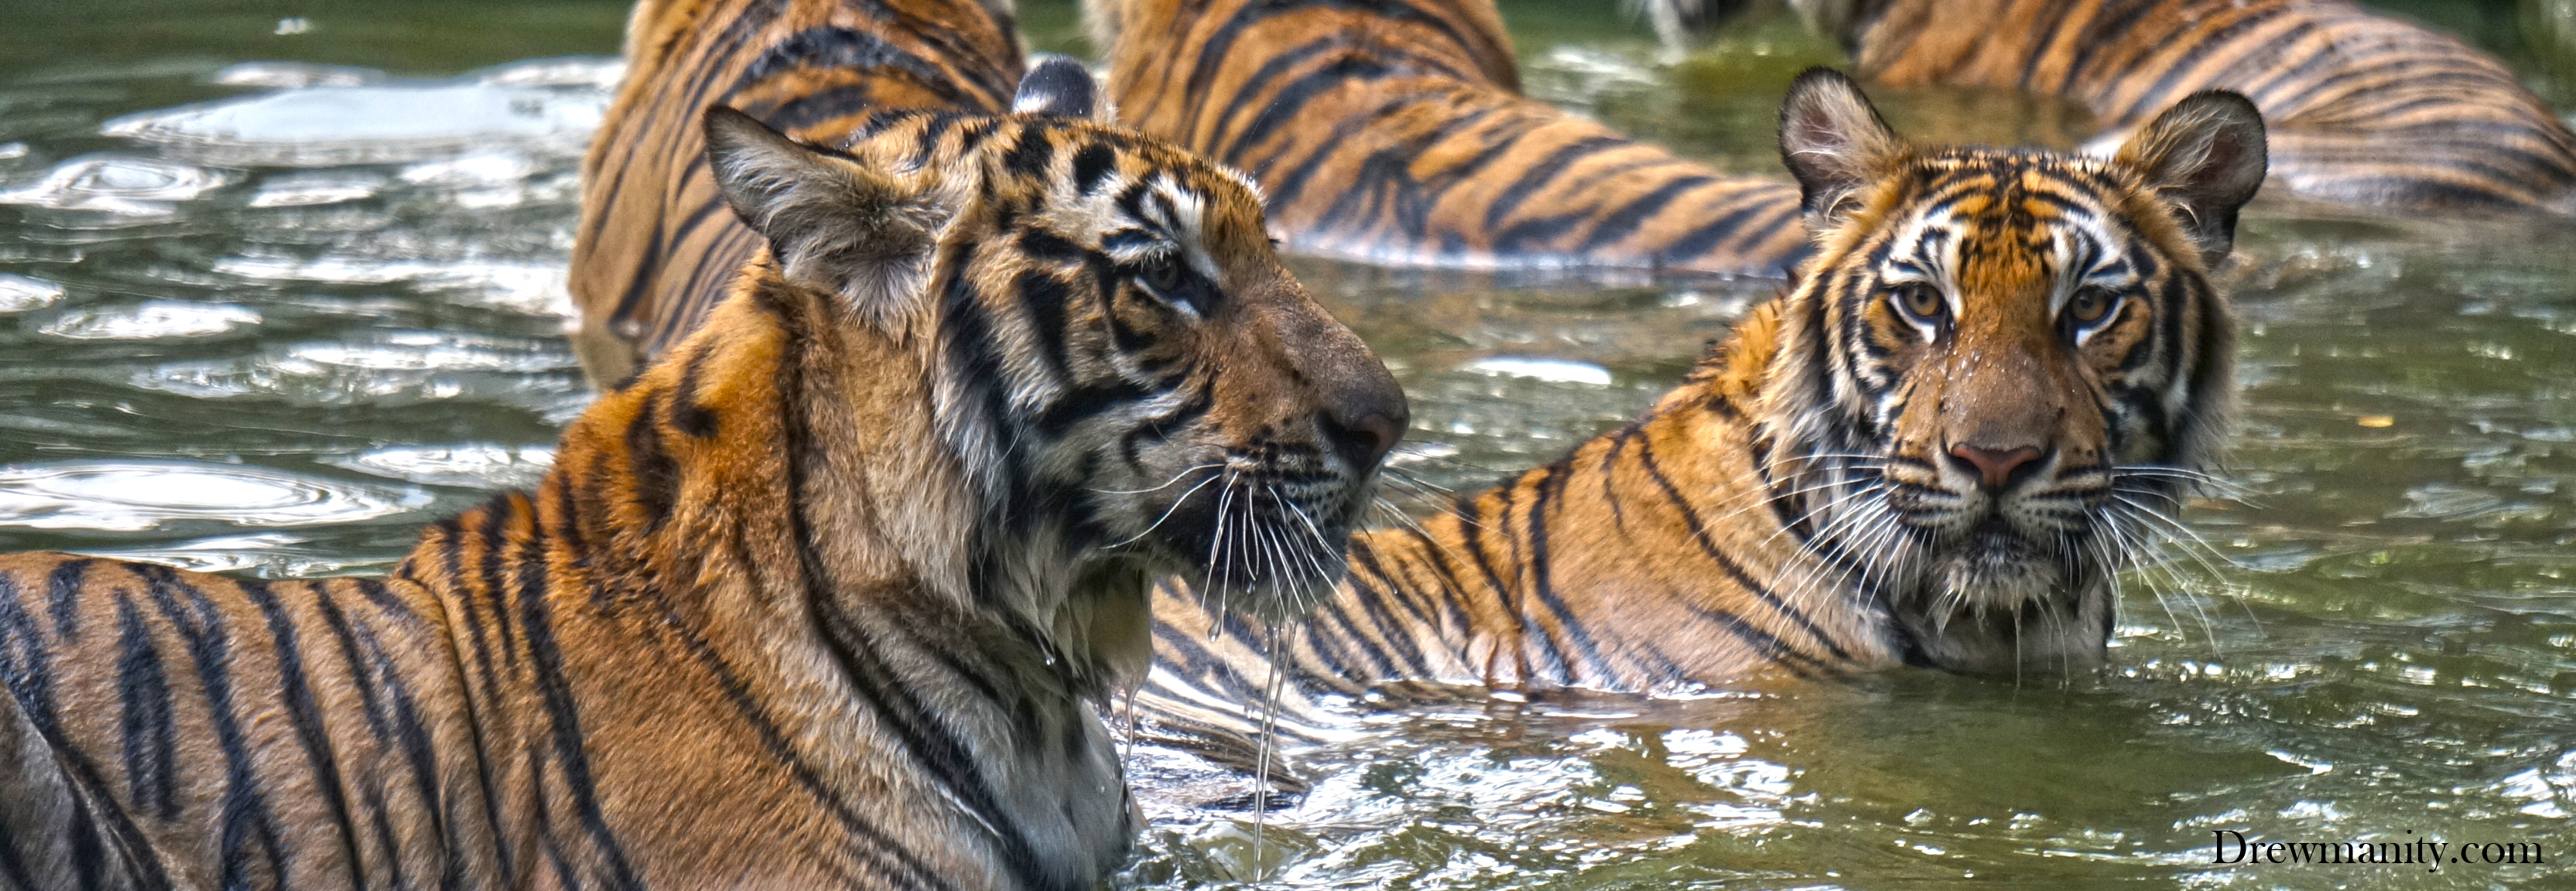 Thailand Tiger